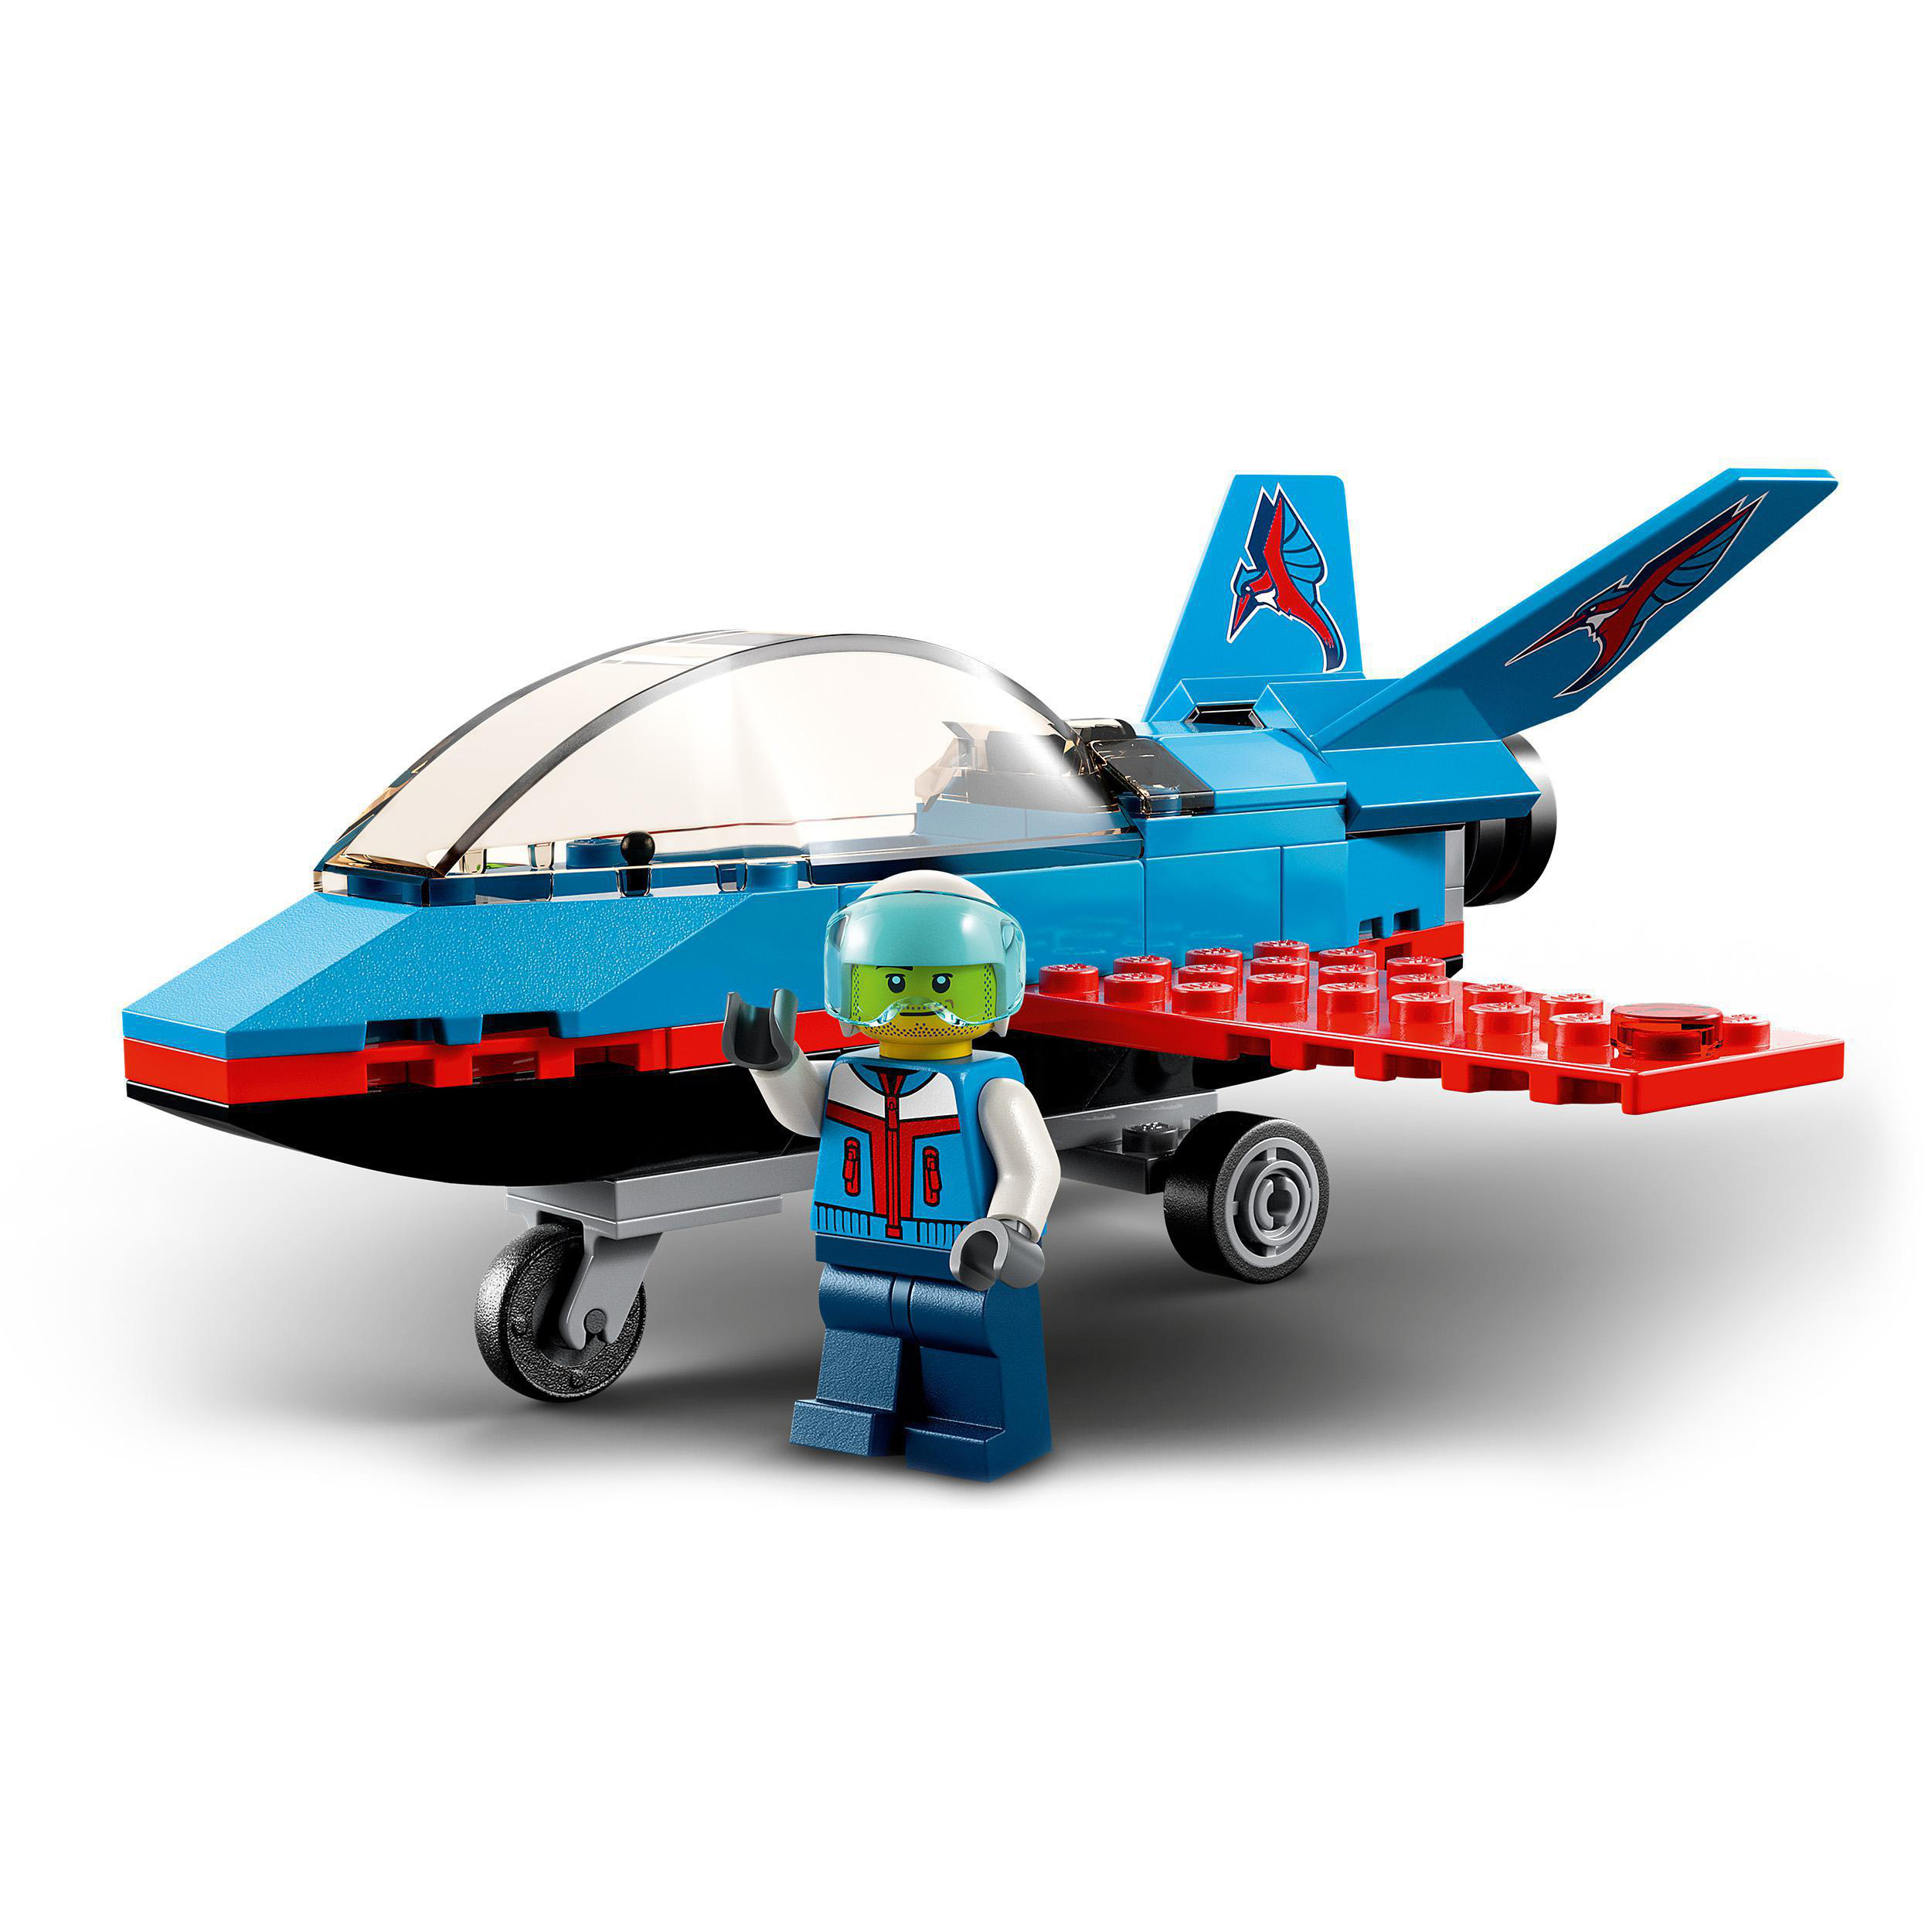 Bausatz, City 60323 Stuntflugzeug LEGO Mehrfarbig